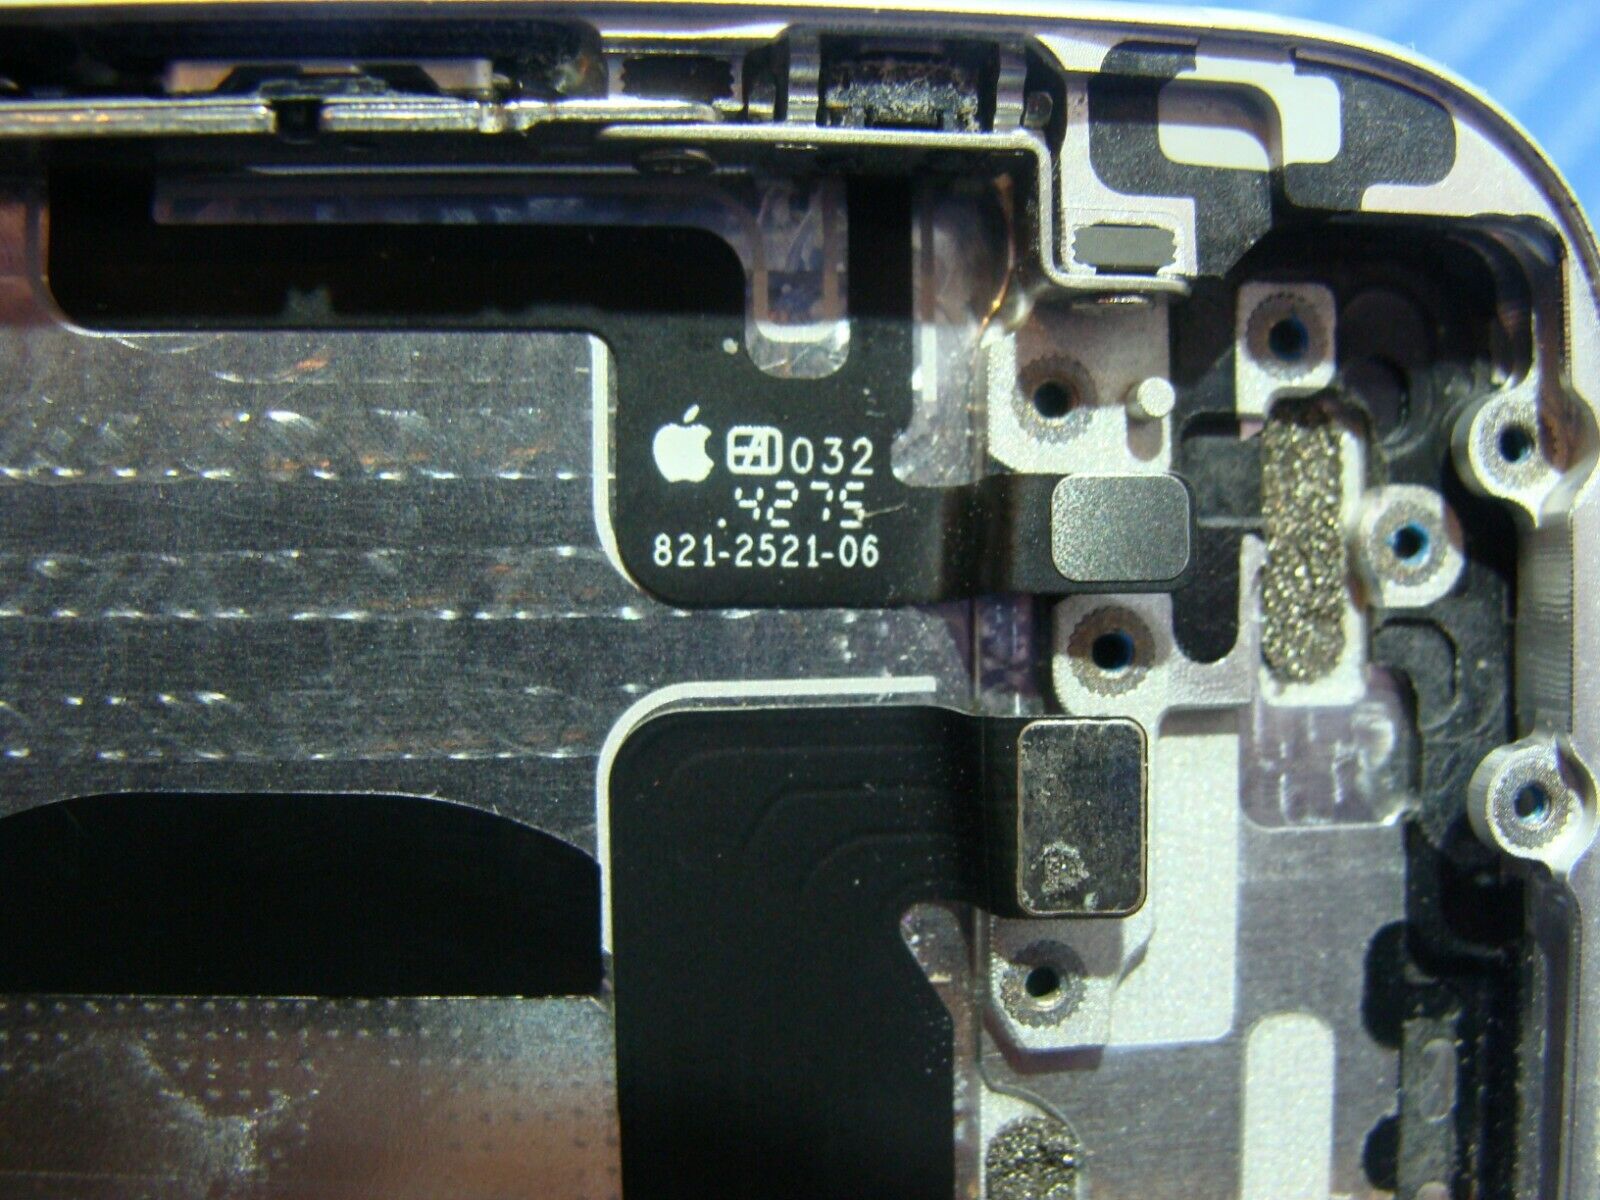 Apple iPhone 6 A1549 MG5X2LL/A 2014 4.7